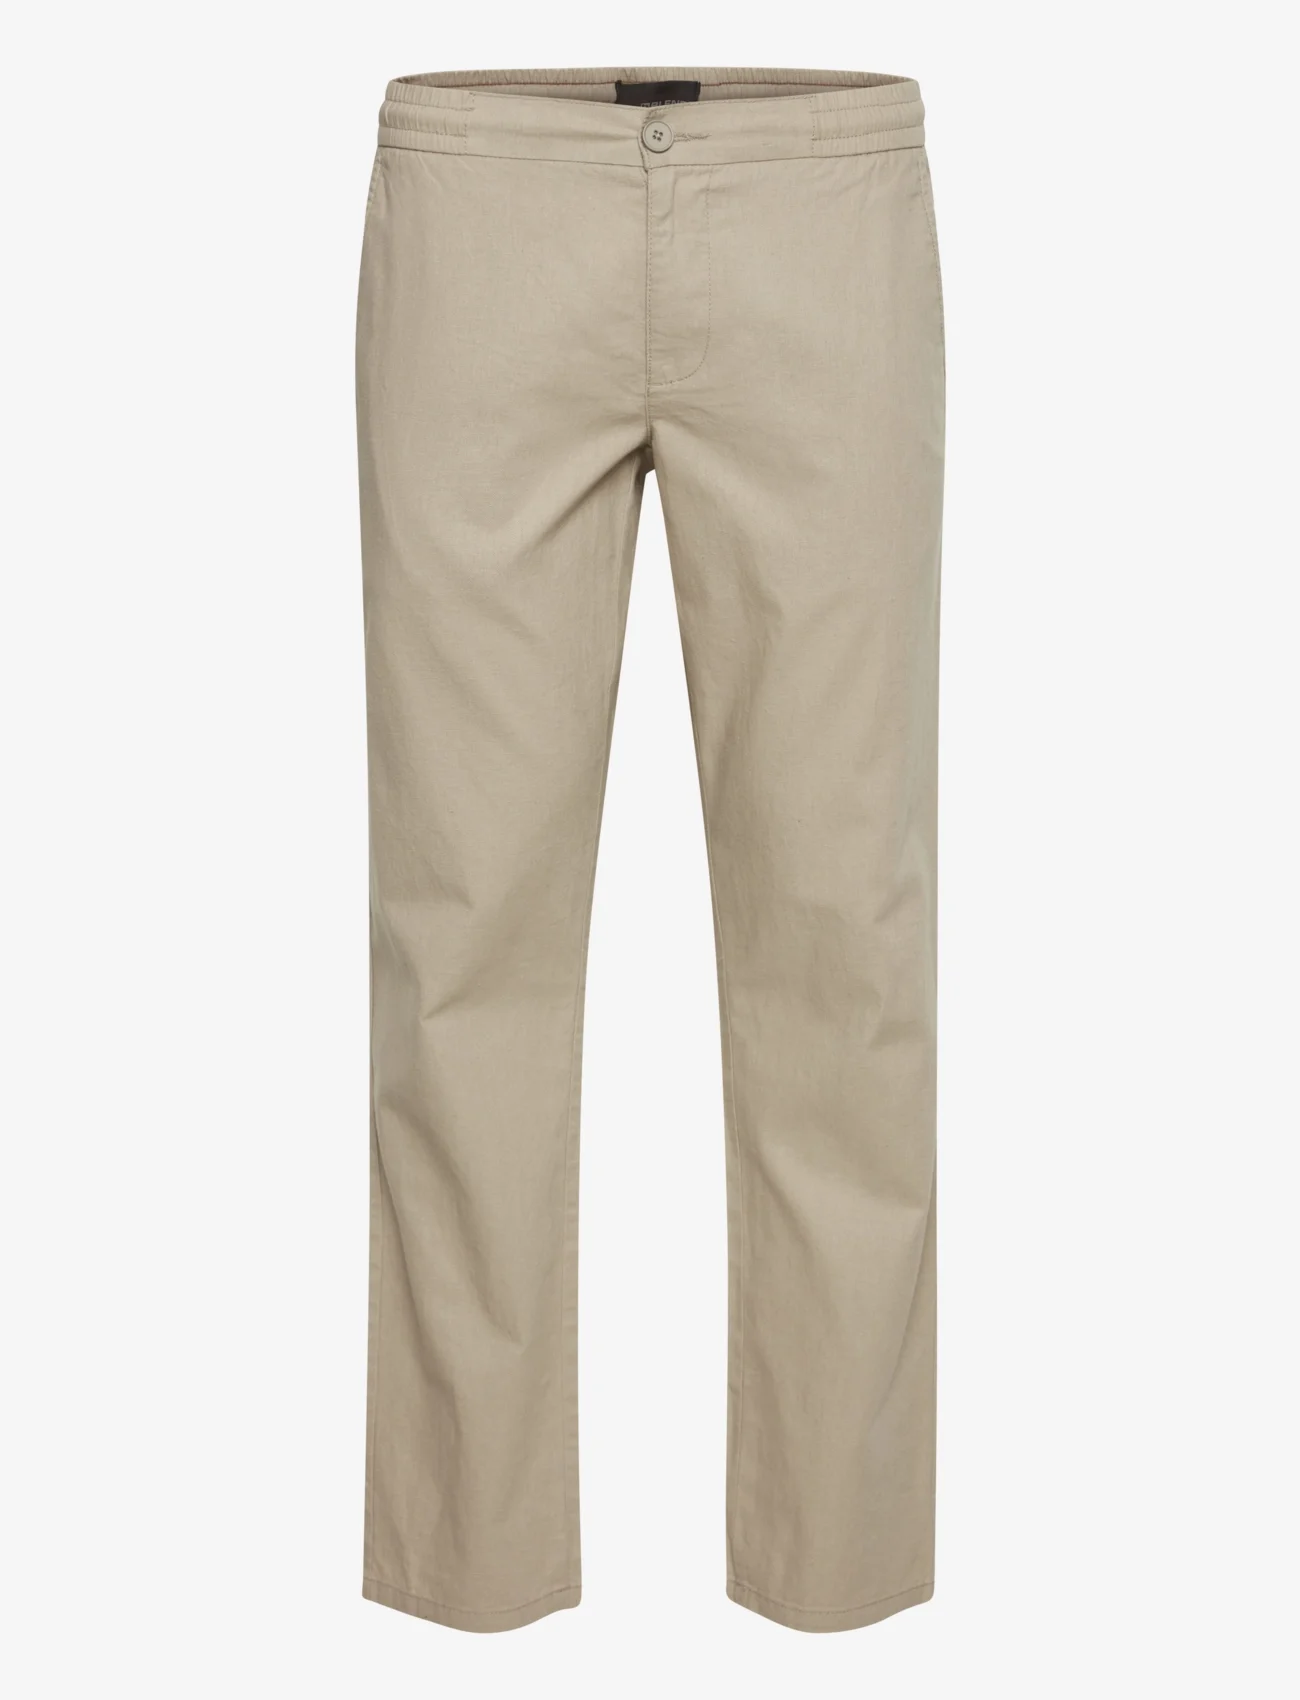 Blend - Pants - spodnie lniane - crockery - 0